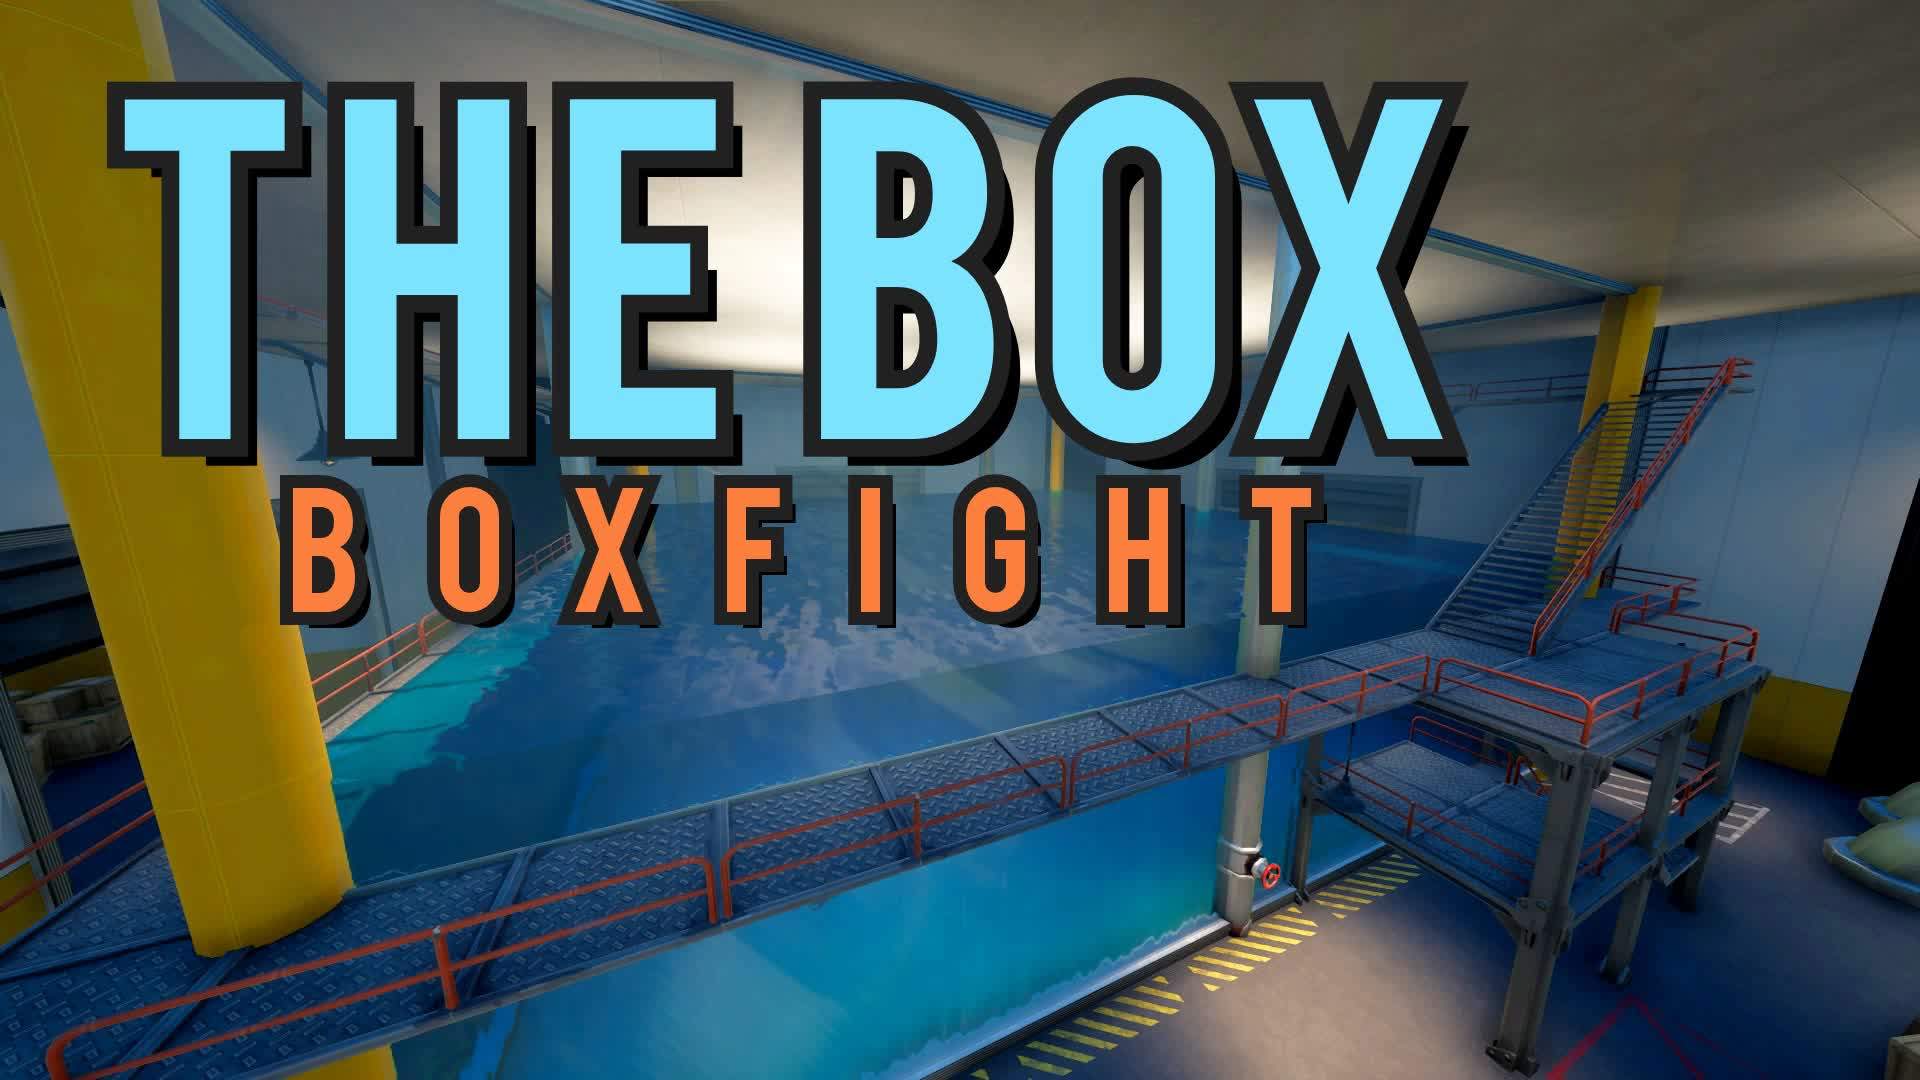 THE BOX - BOXFIGHT